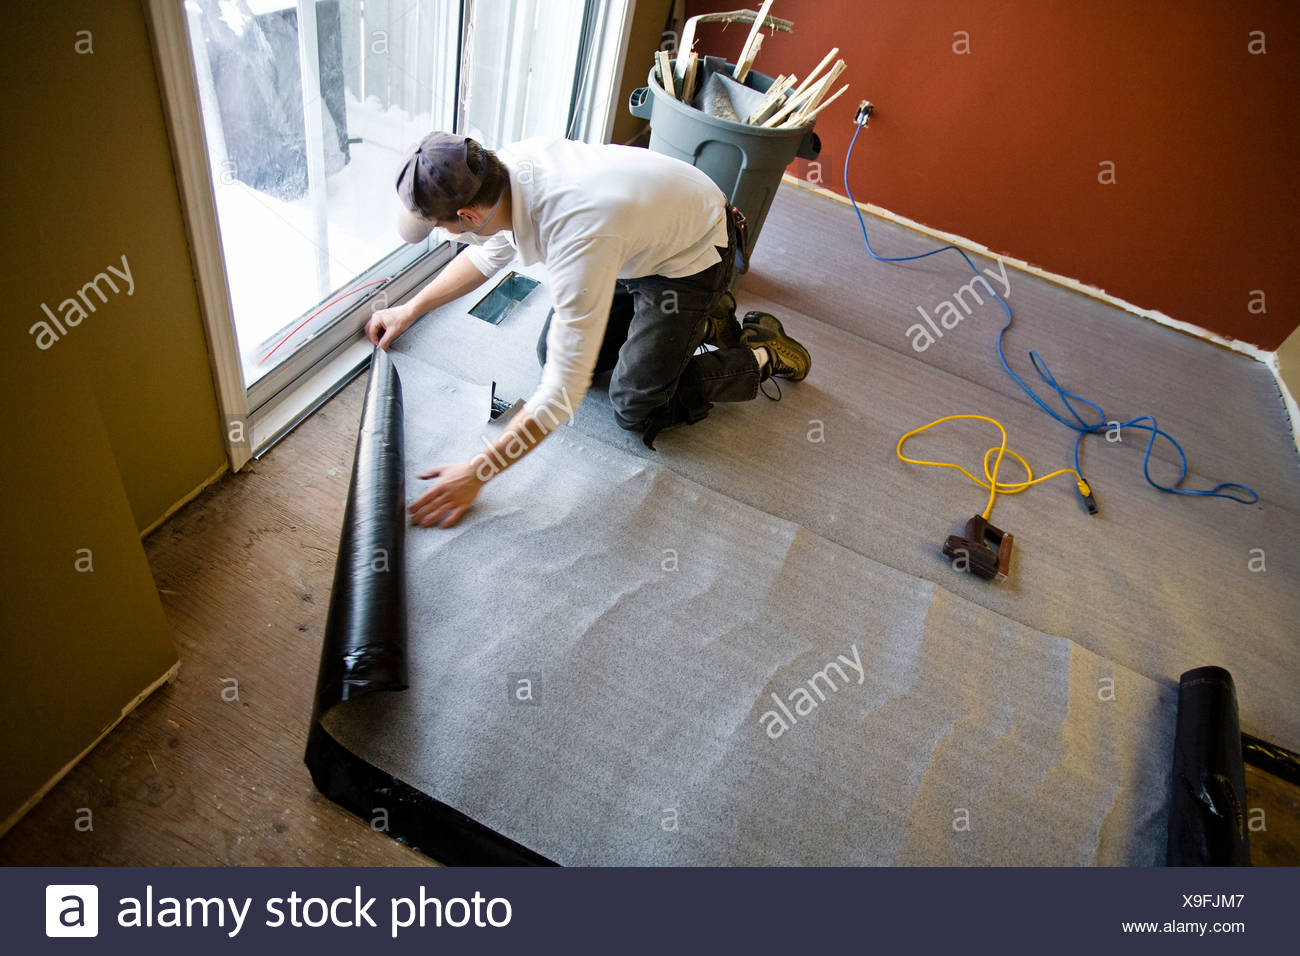 Preparing To Install Laminate Flooring Stock Photo 281241751 Alamy